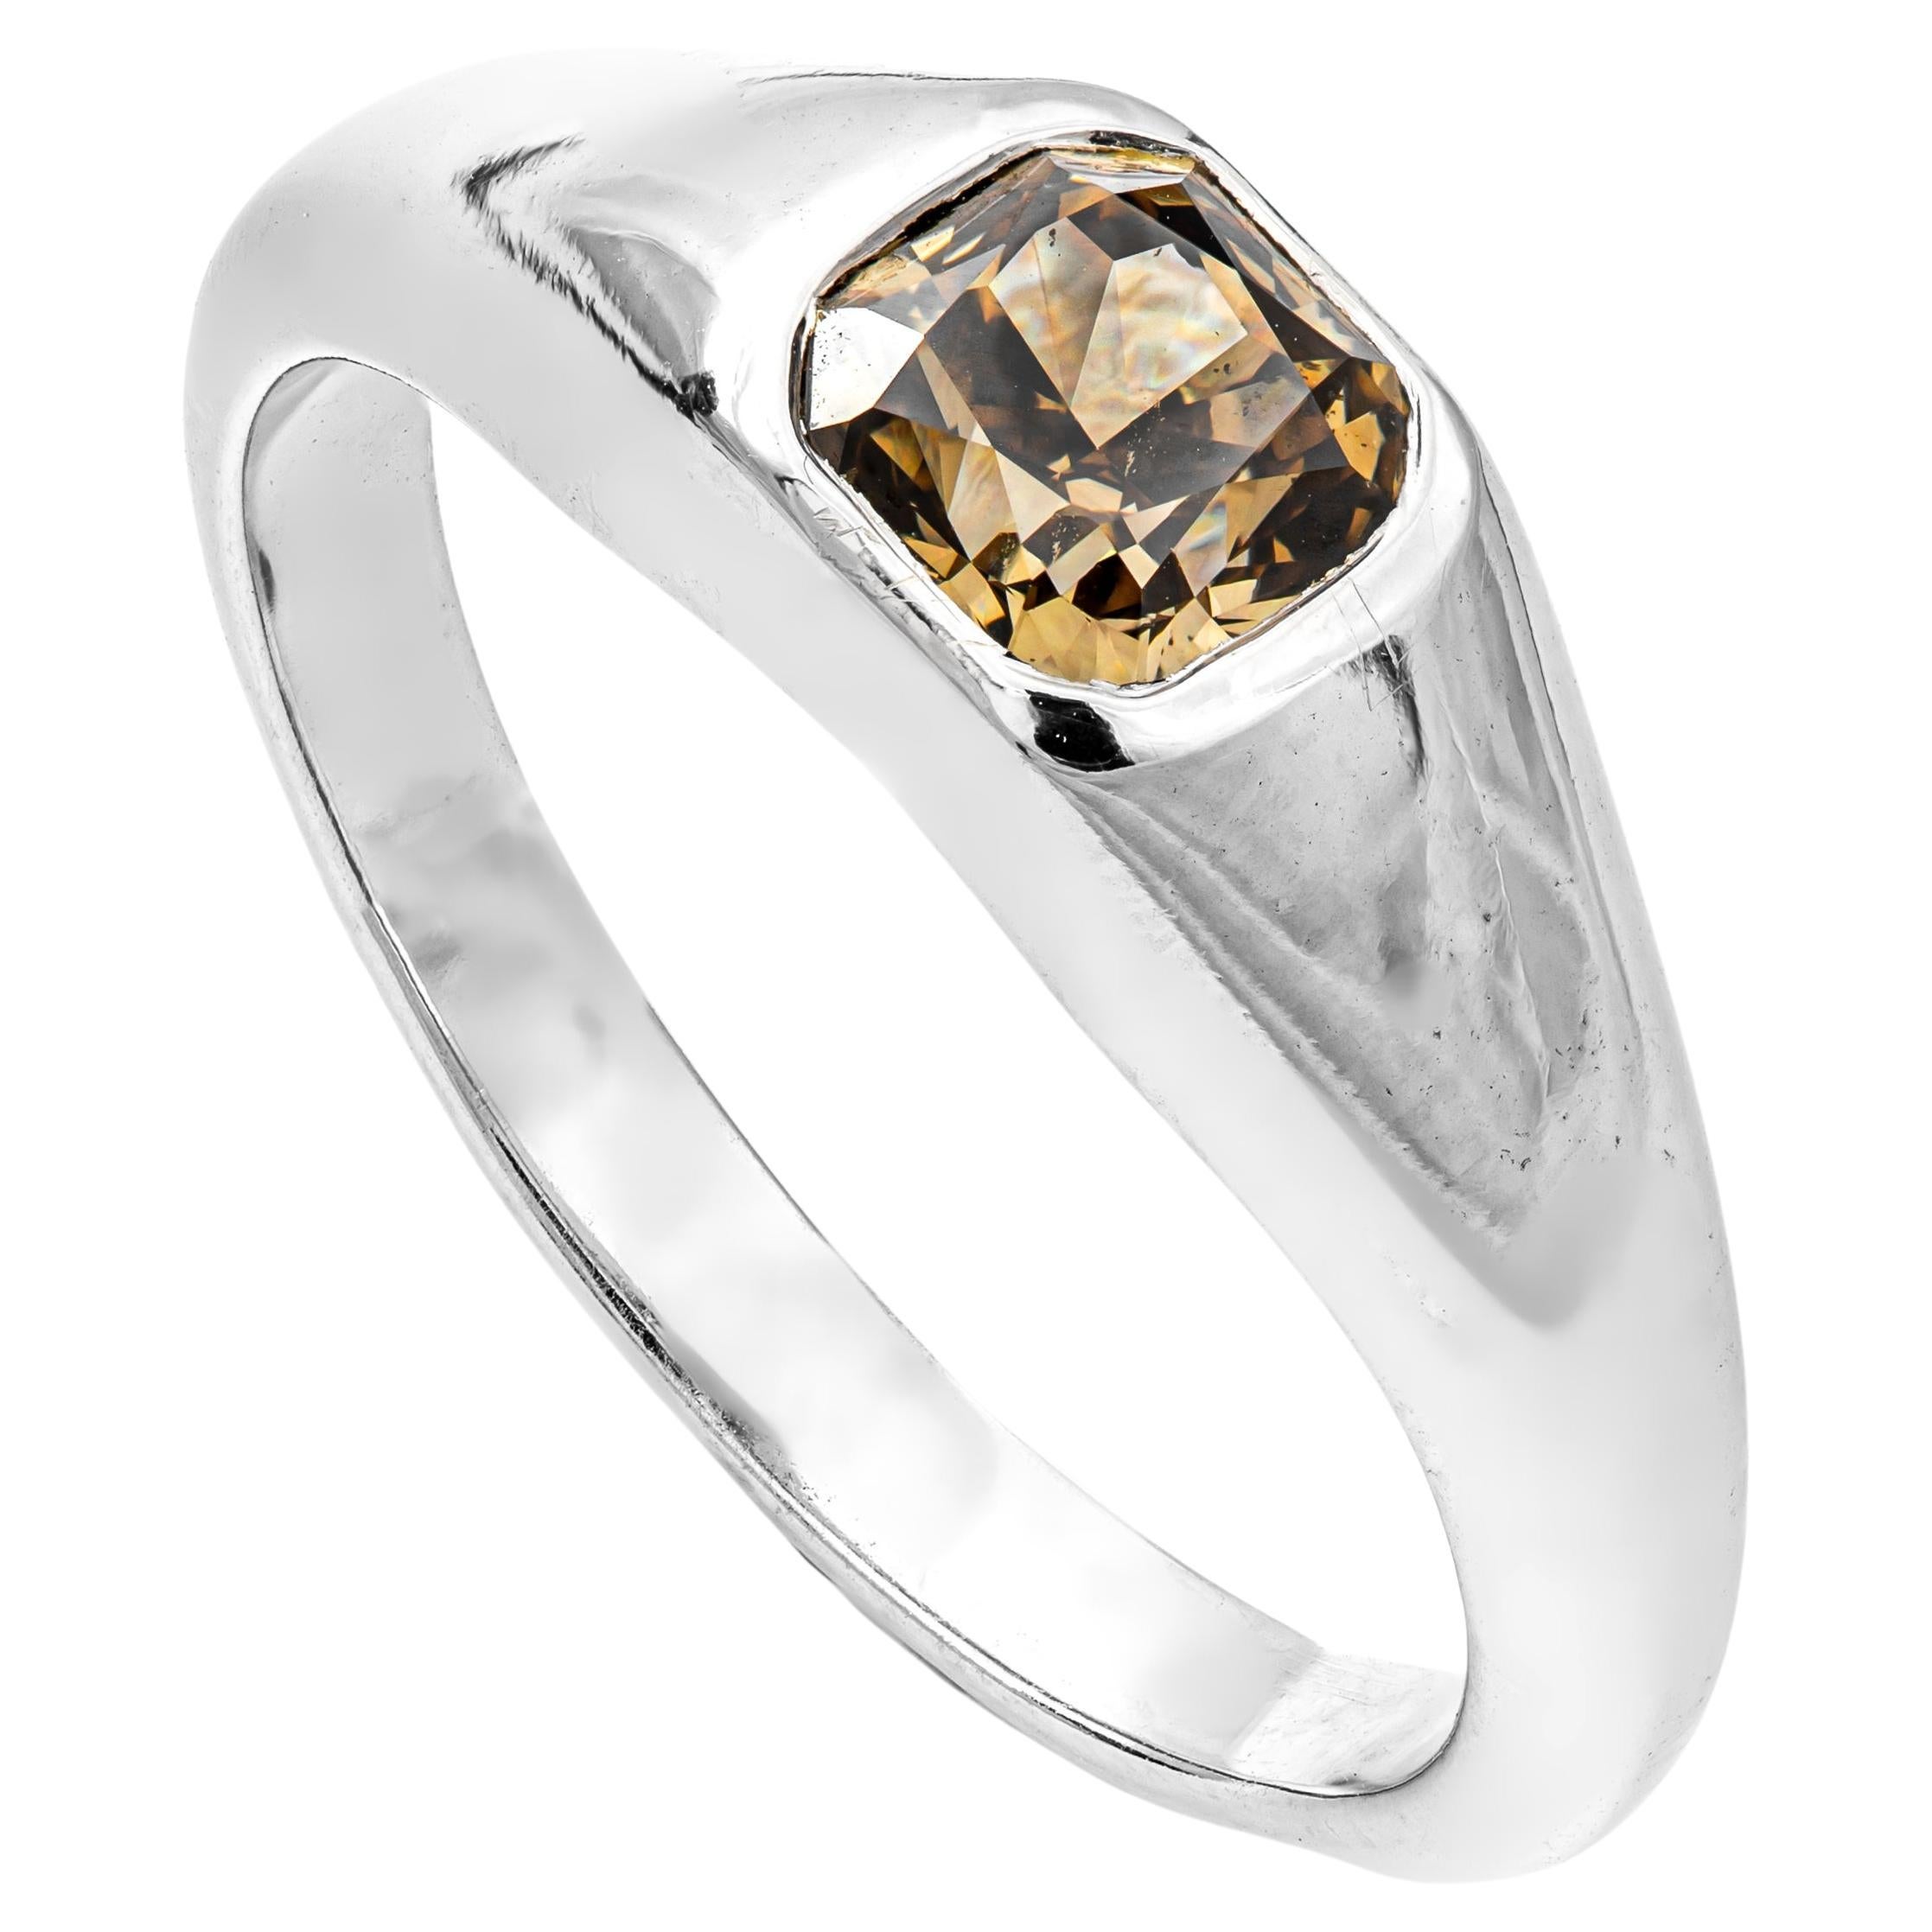 1.23 ct Natural Fancy Deep Yellow Brown Diamond Men Ring, No Reserve Price